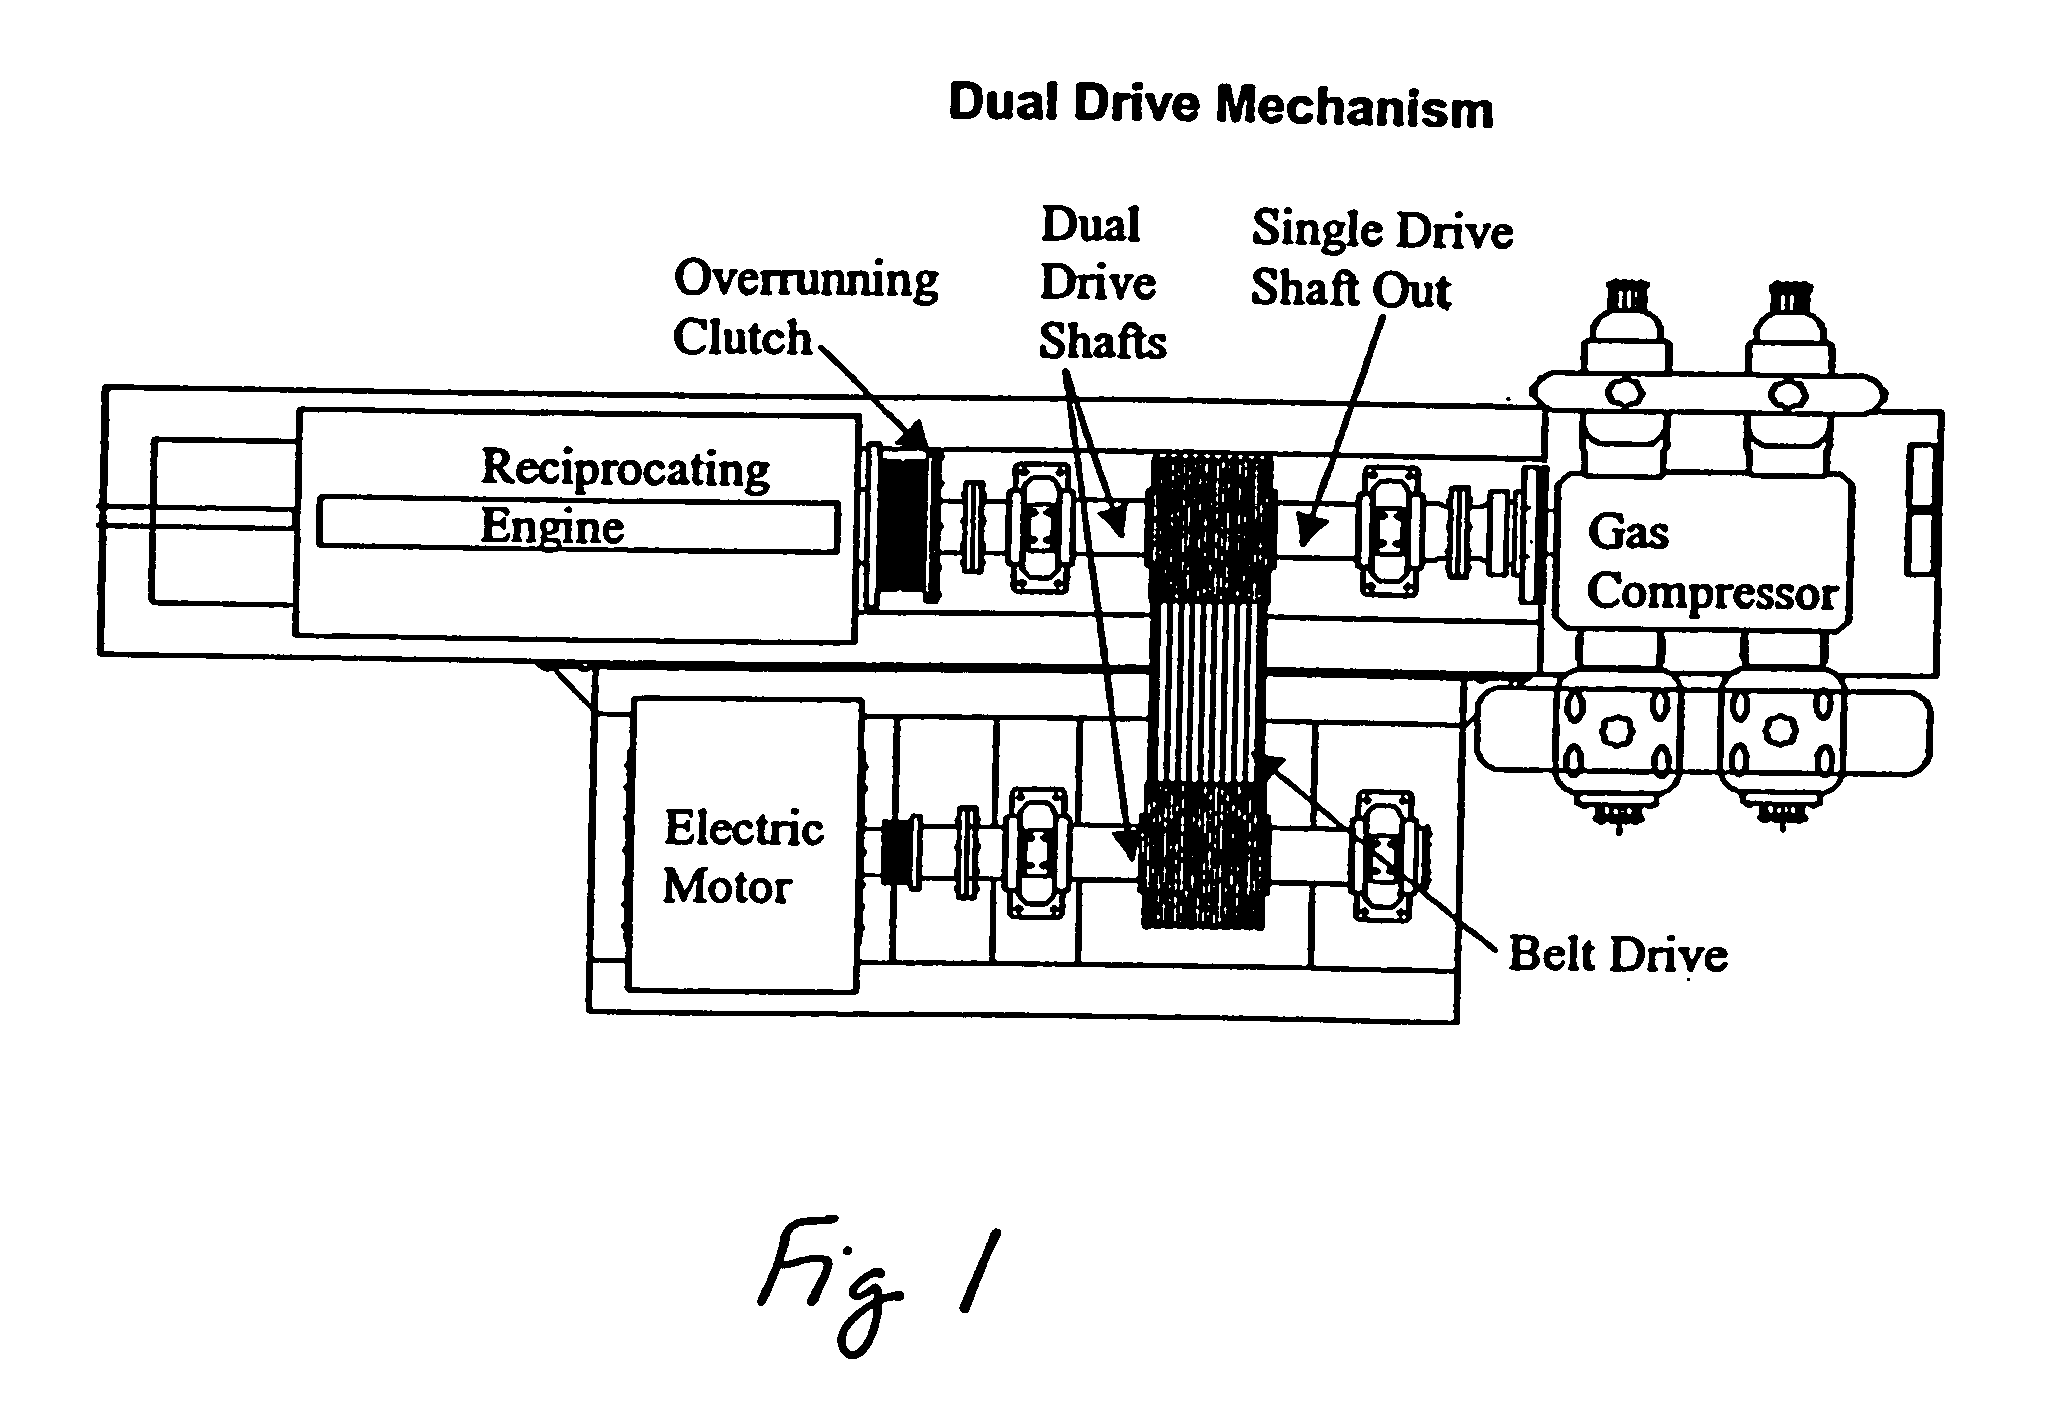 Gas compressor dual drive mechanism